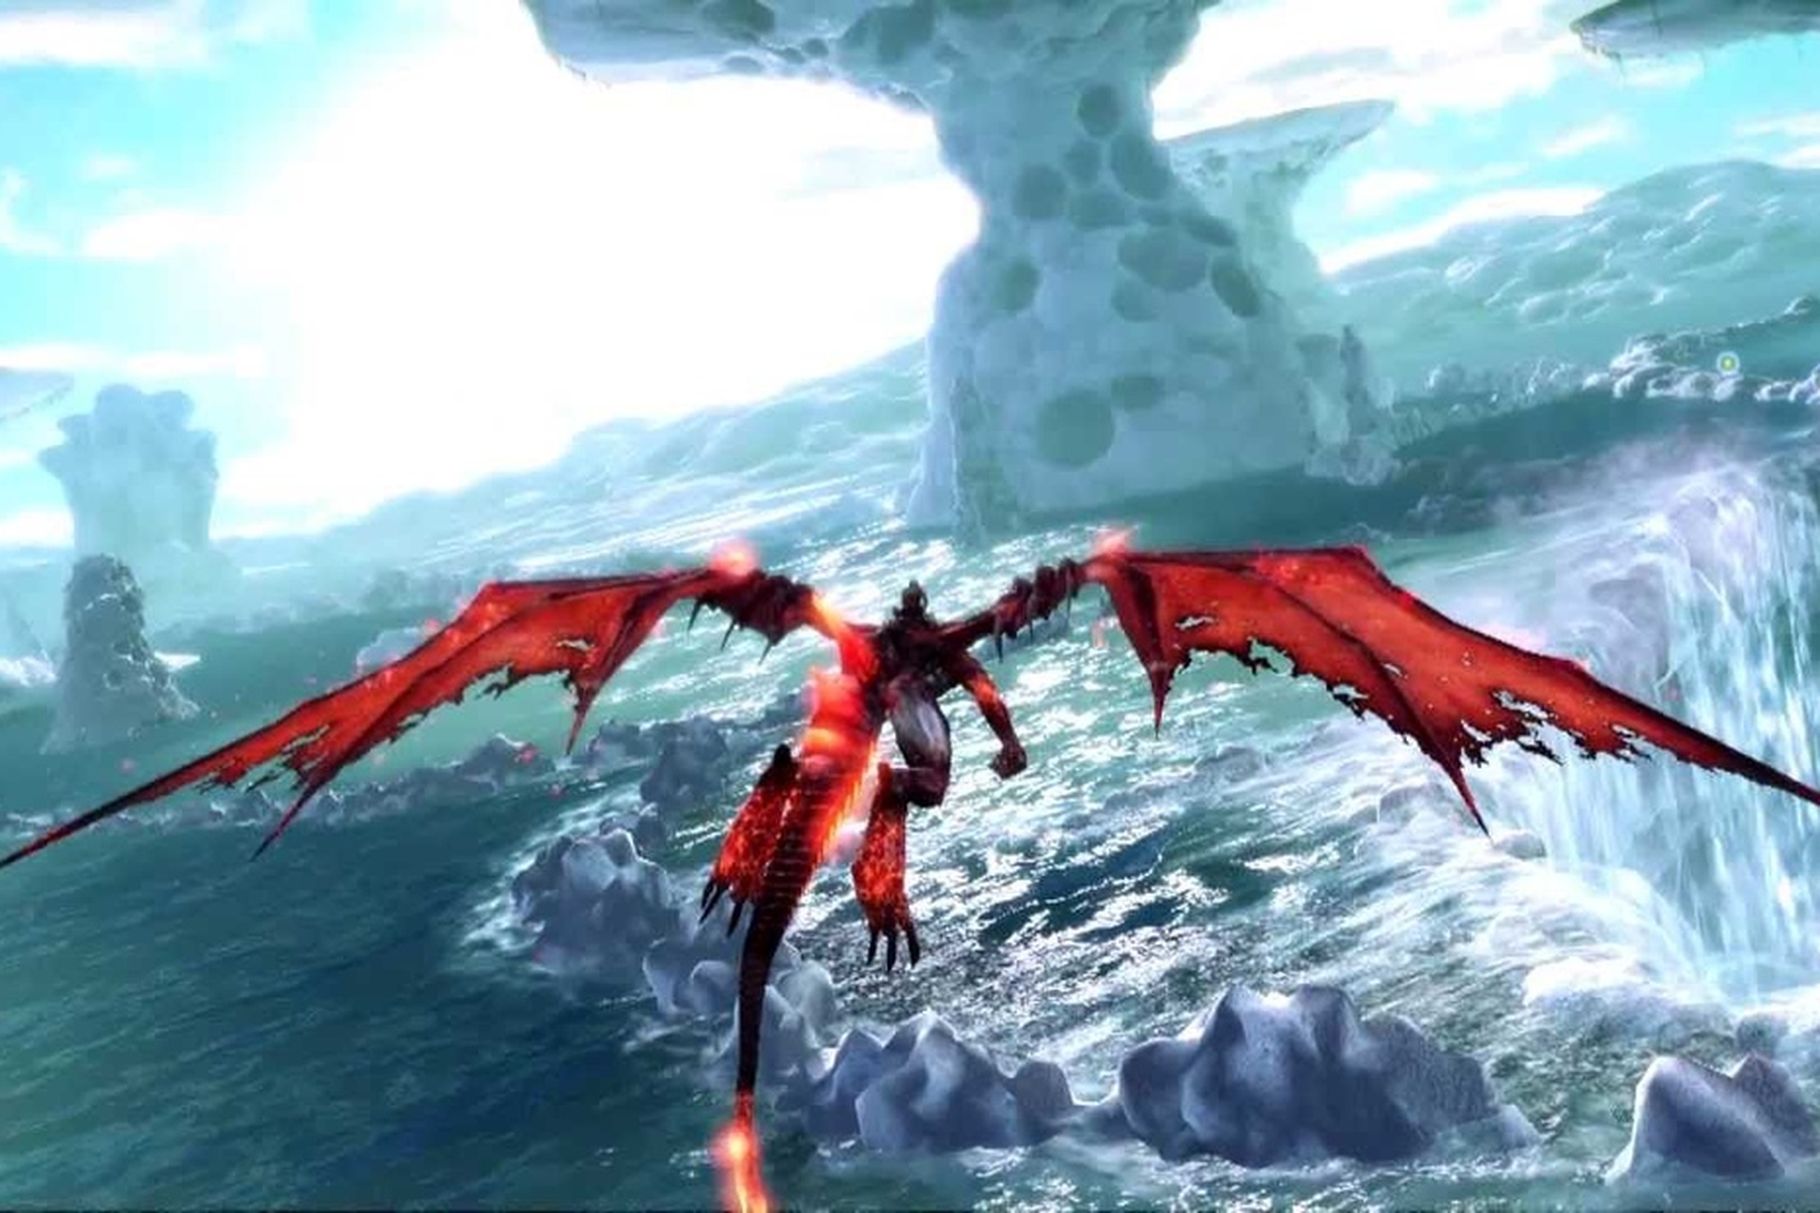 Crimson Dragon Will Feature "Free Flight" Mode